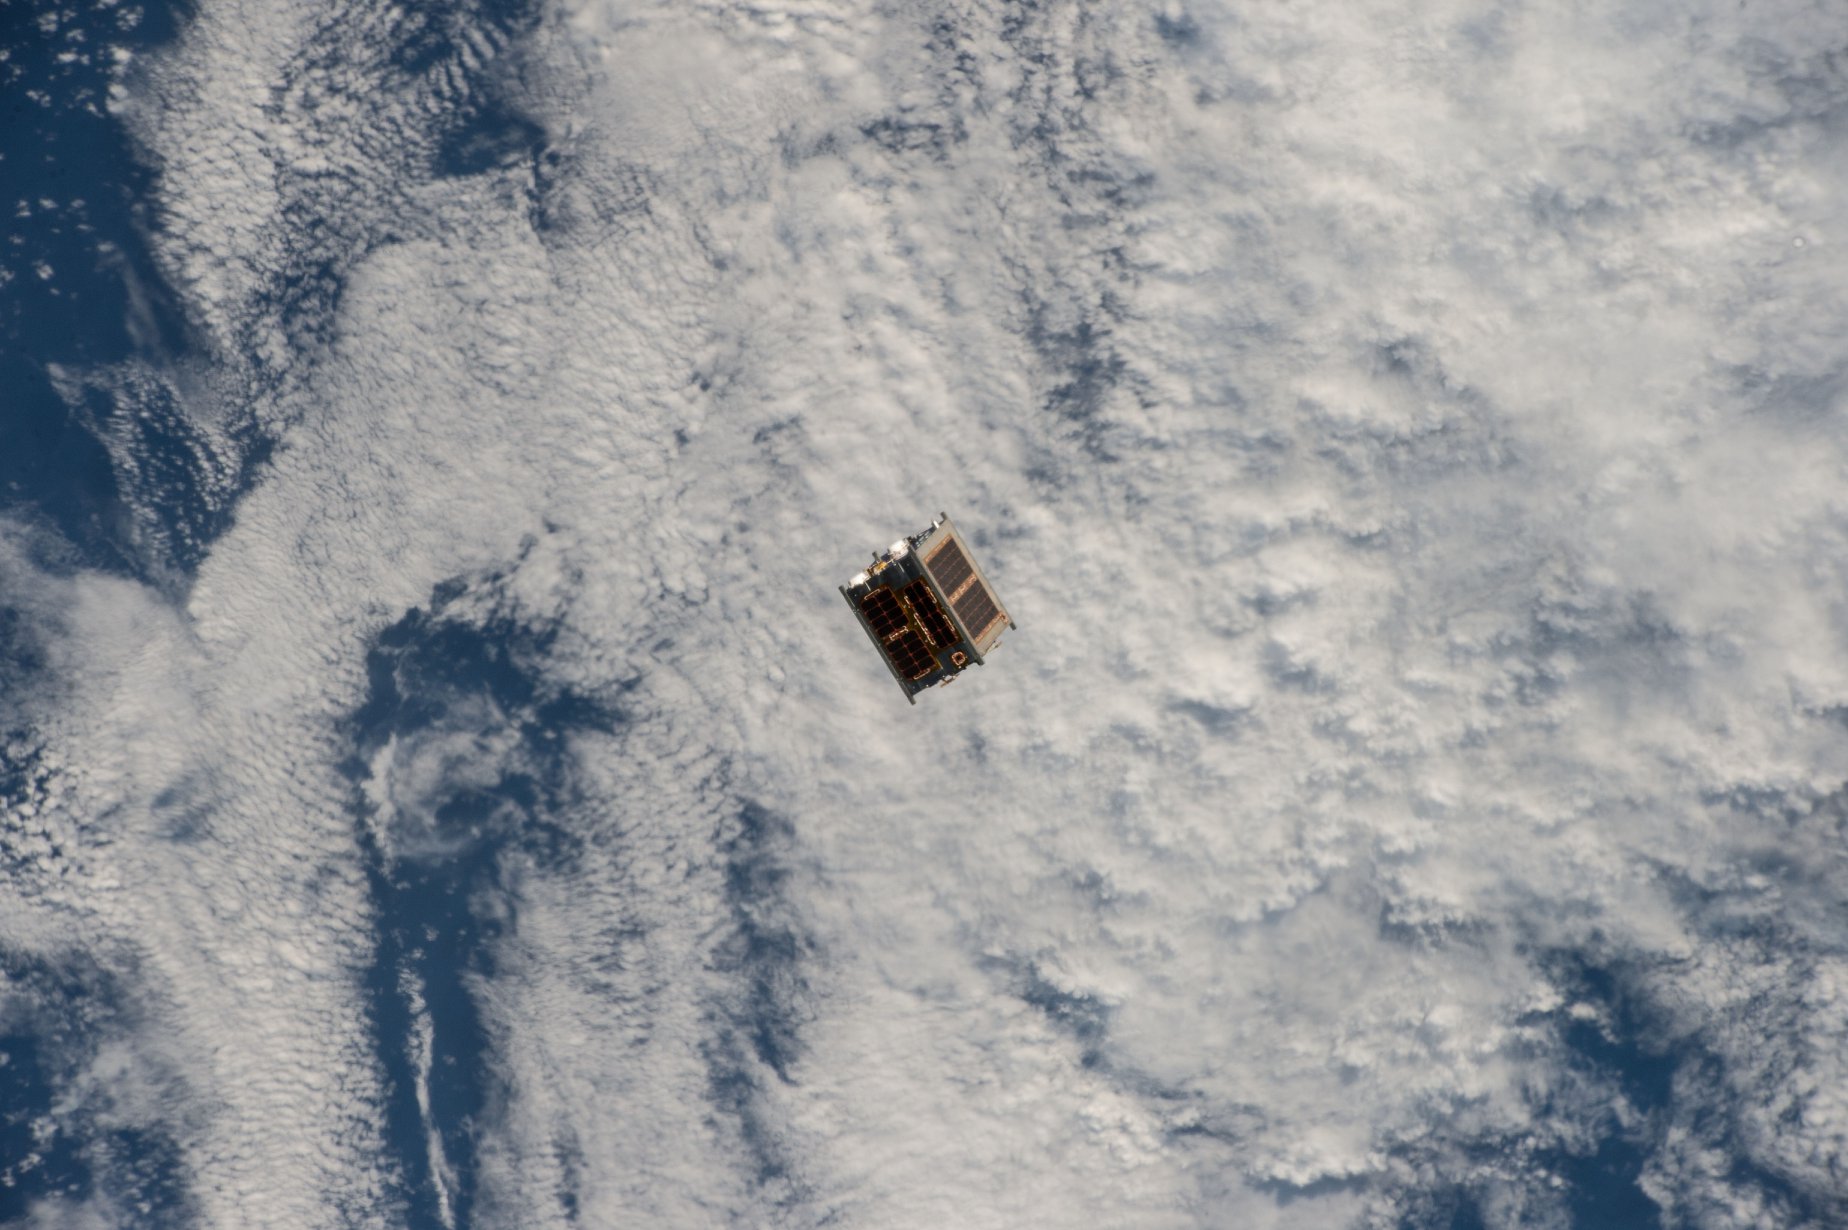 microsatellite Diwata-1 mission complete